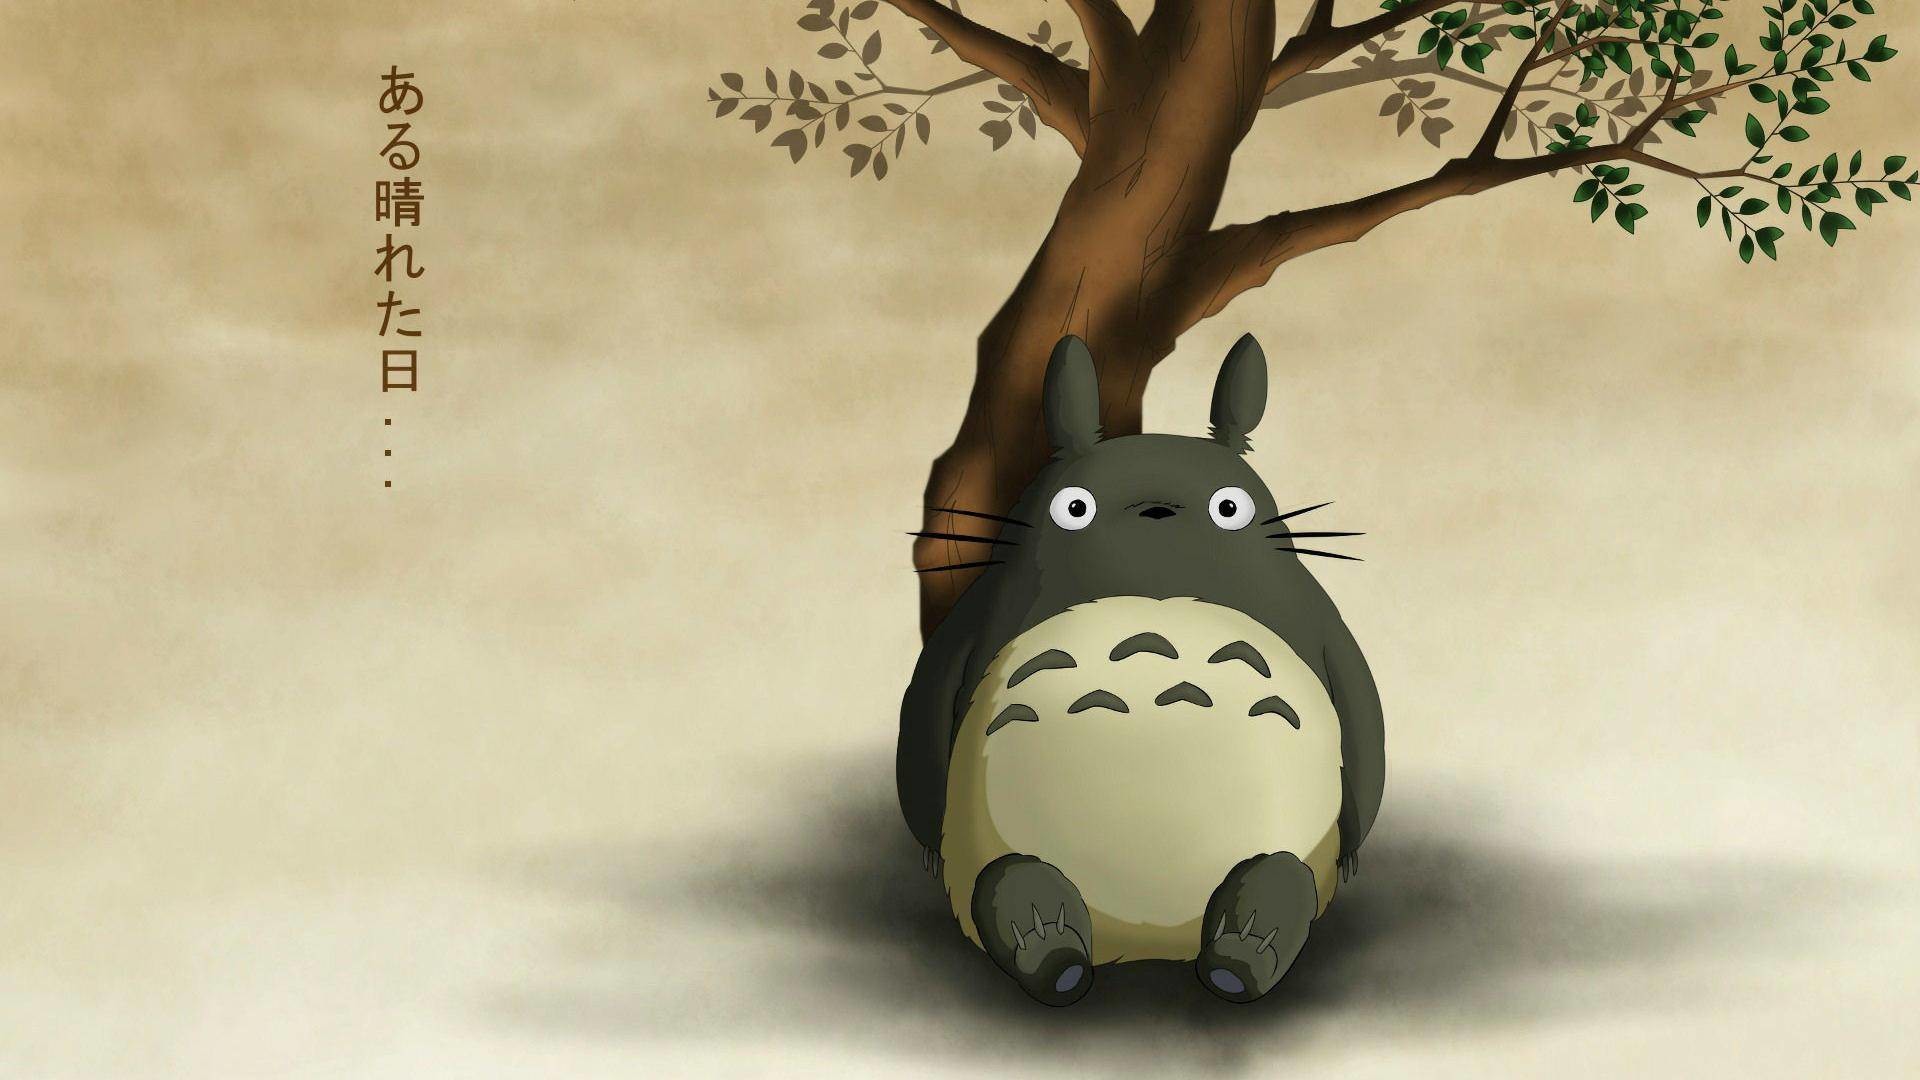 1920x1080 My Neighbor Totoro - Studio Ghibli Wallpaper